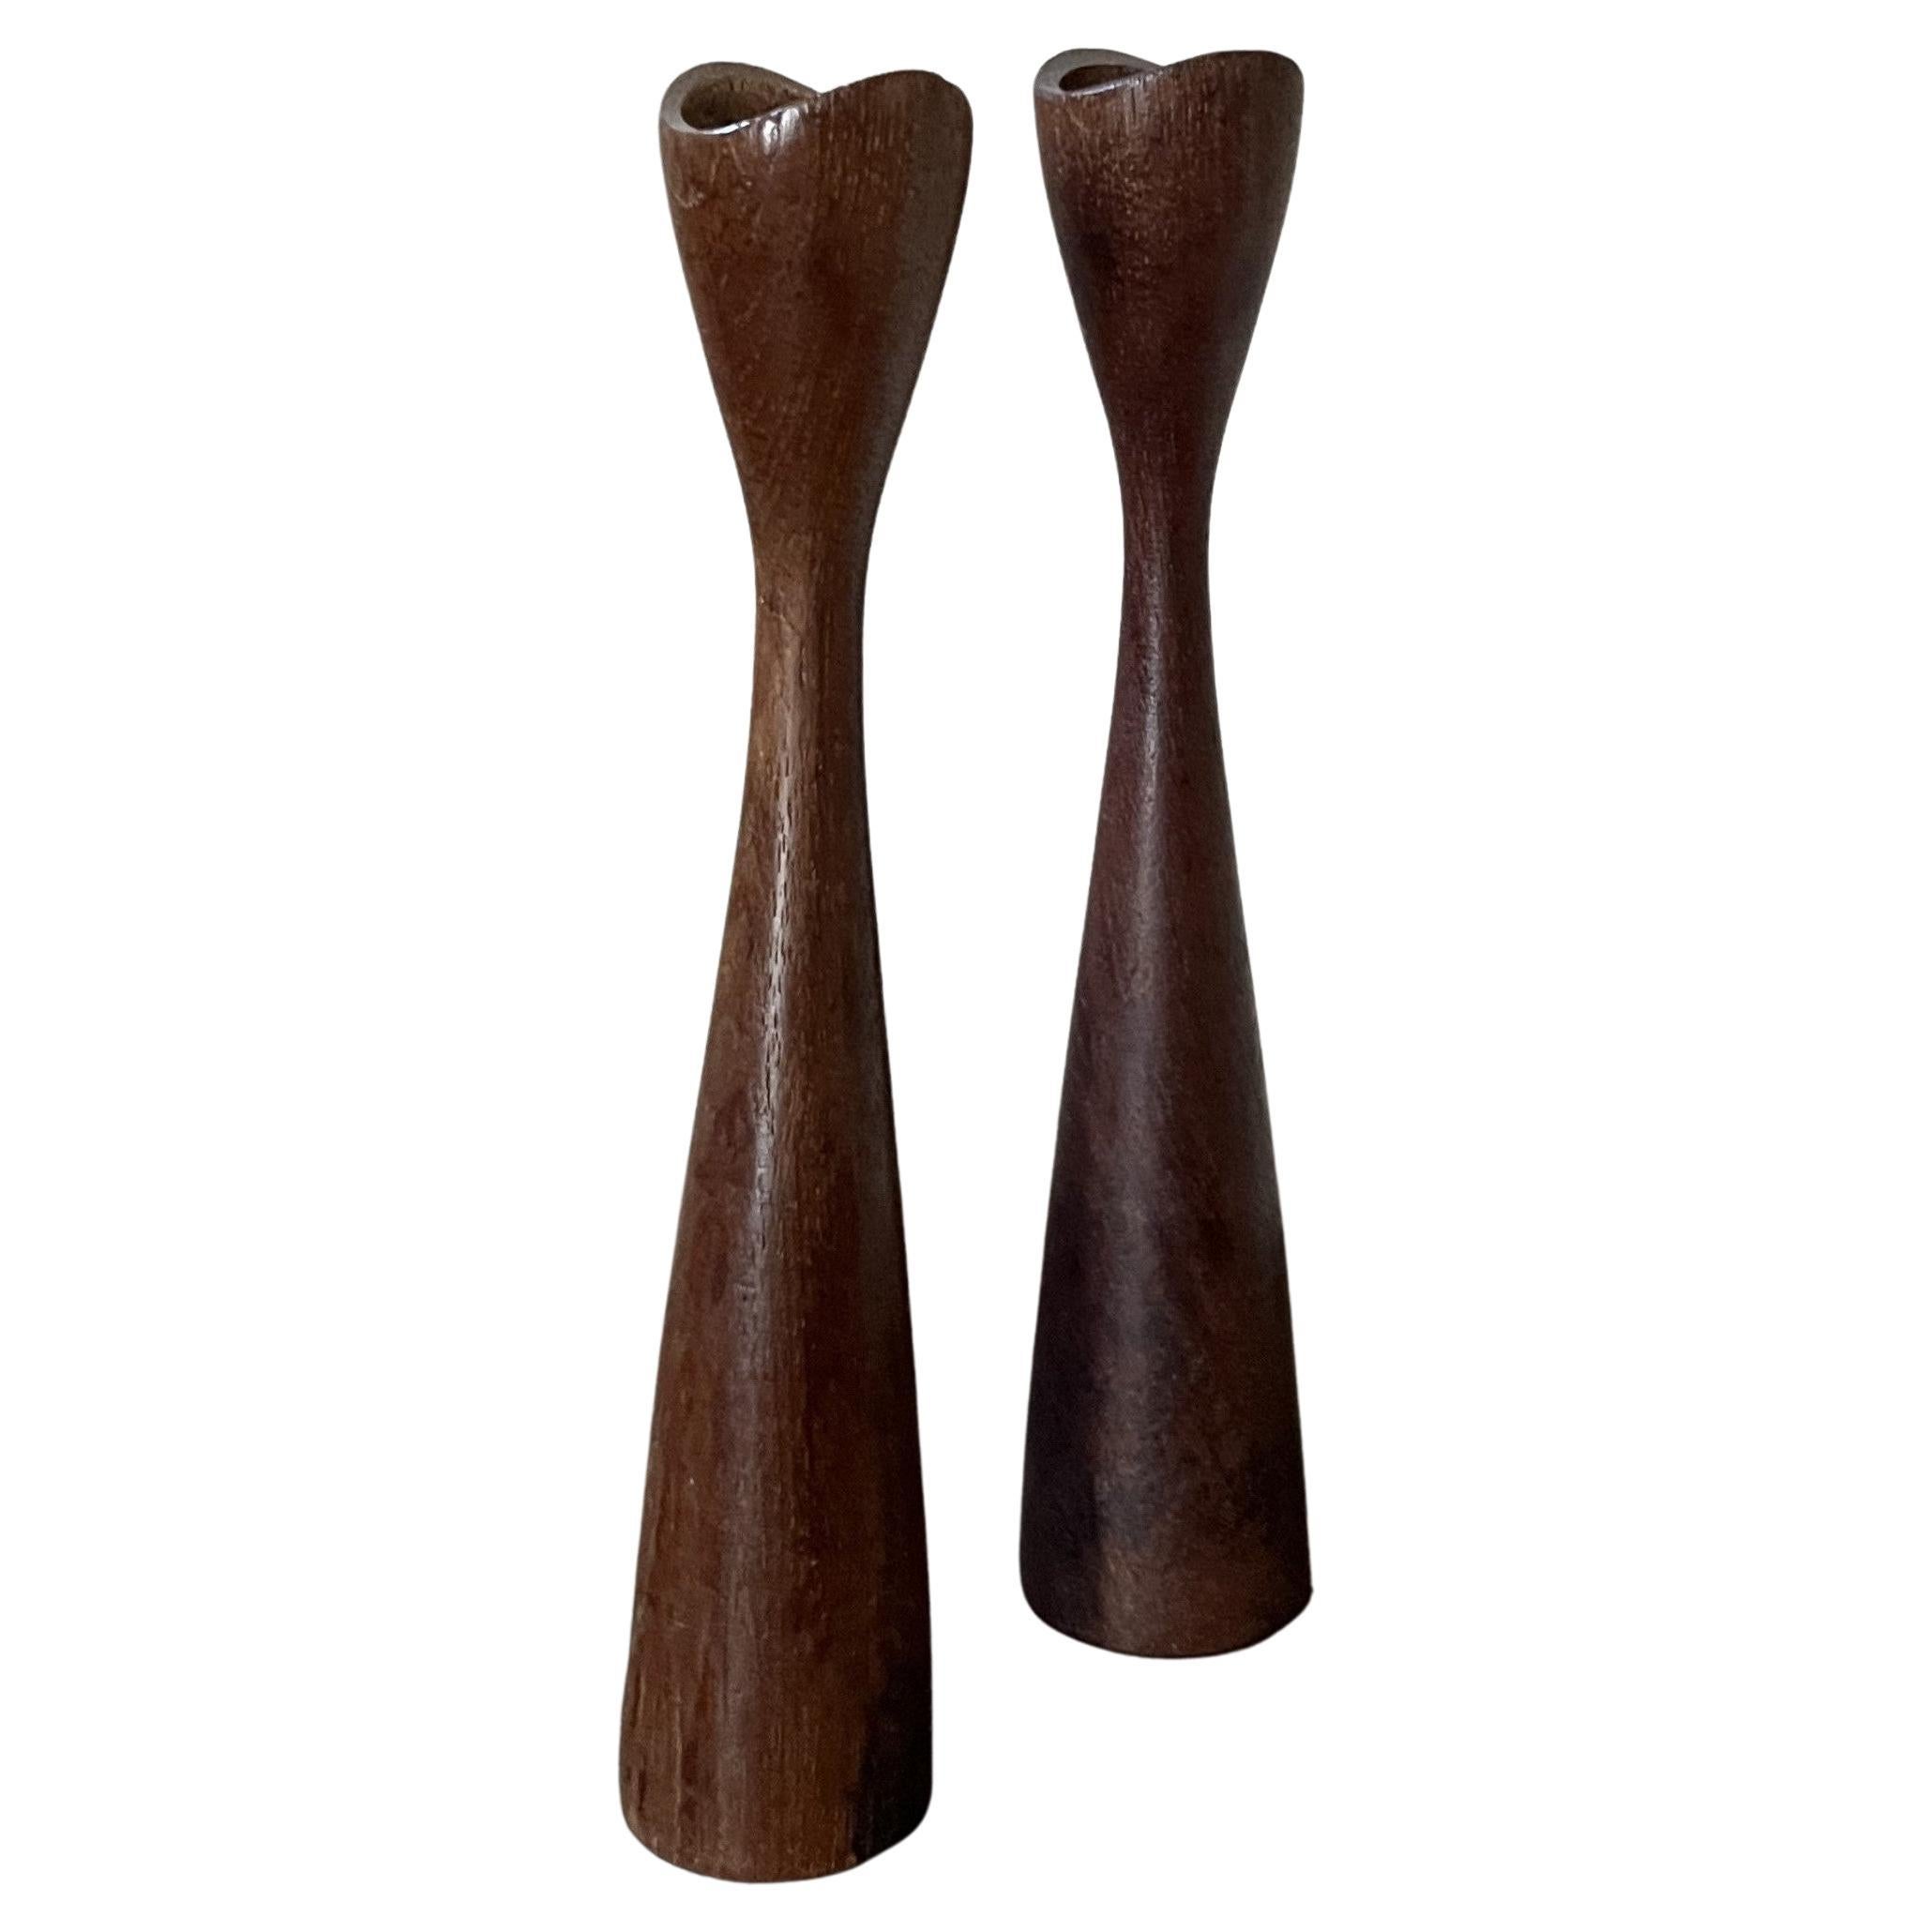 Set of 2 modernist organic candlesticks